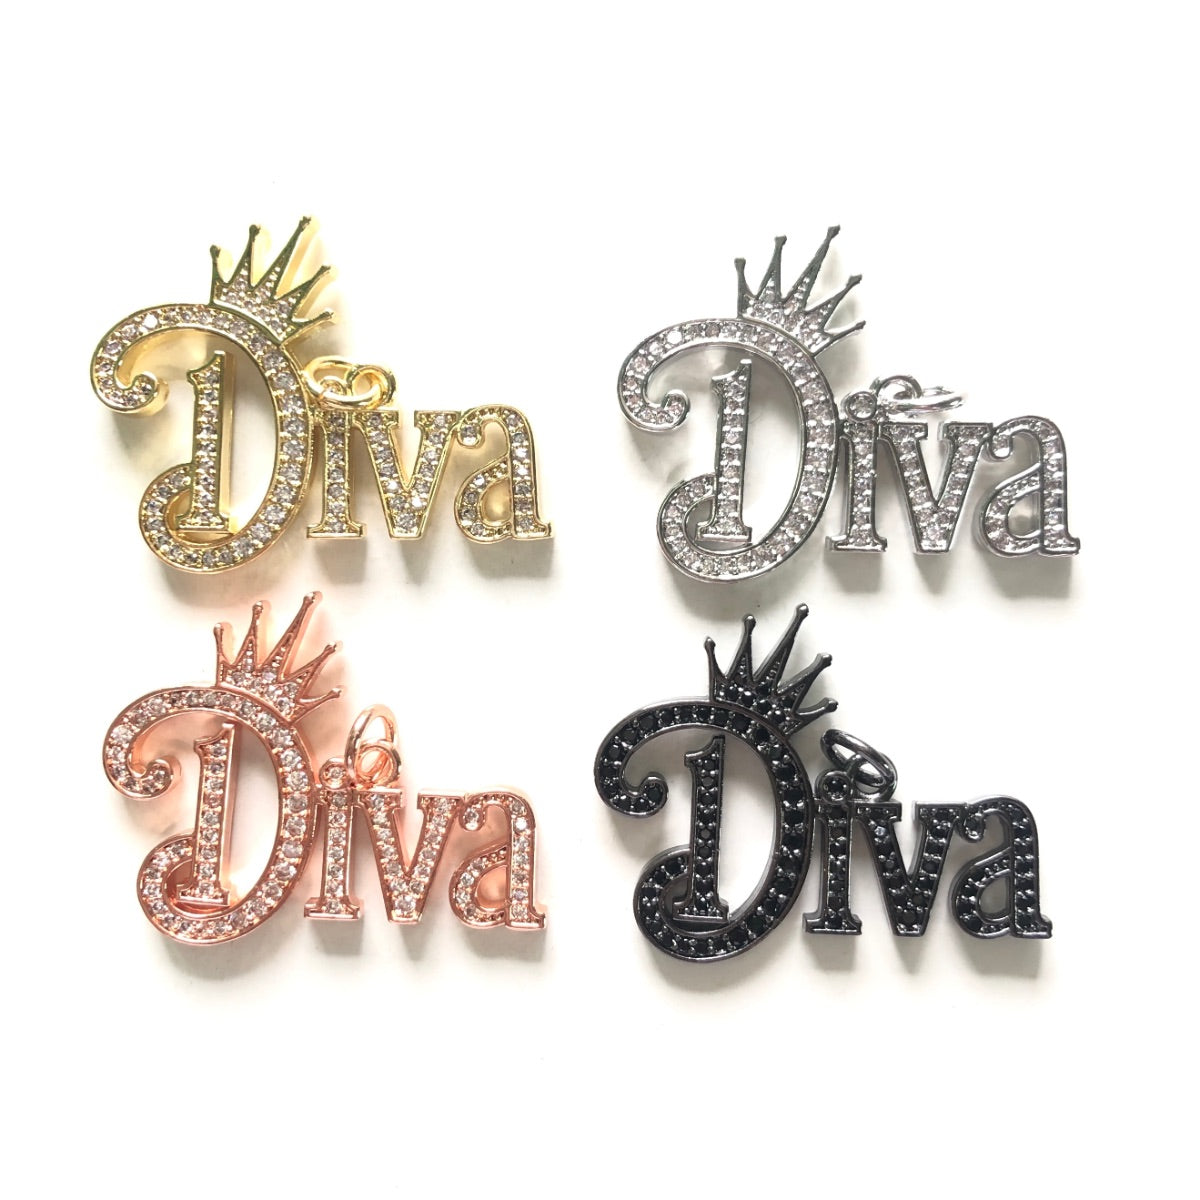 10pcs/lot 34*26.5mm CZ Pave Crown DIVA Word Charms CZ Paved Charms Crowns New Charms Arrivals Words & Quotes Charms Beads Beyond